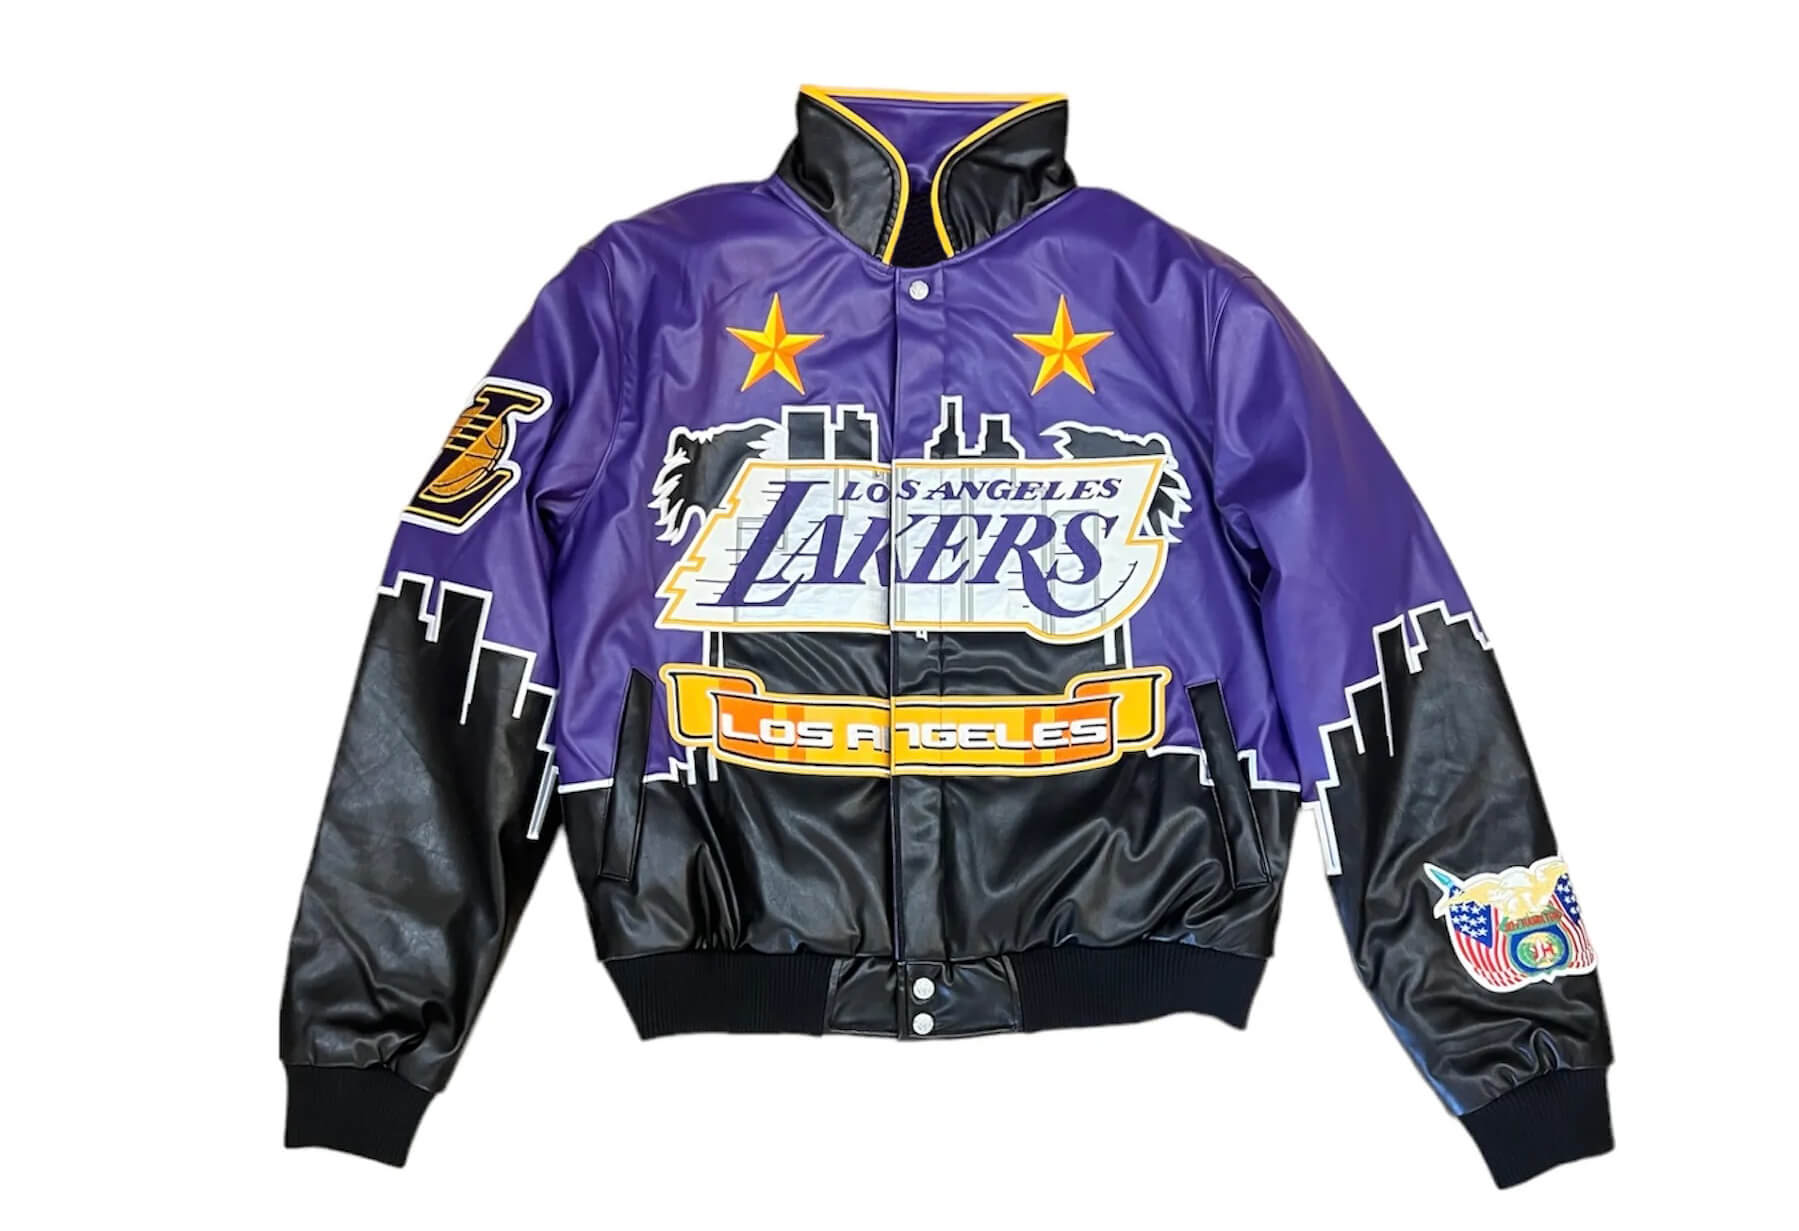 lakers championship leather jacket